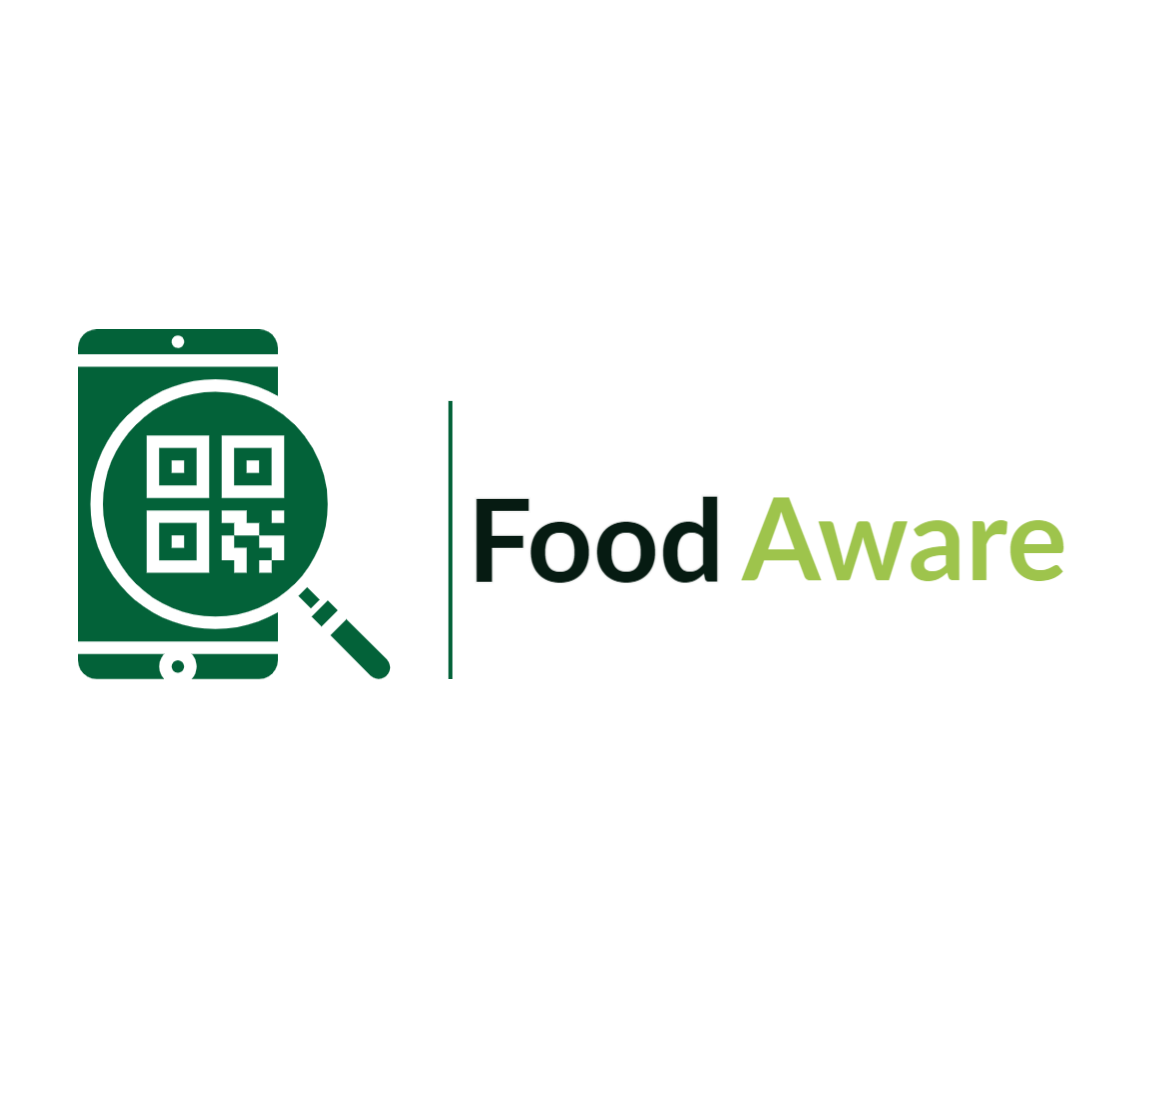 FoodAware - Η συμβολή του GS1 στην ιχνηλασιμότητα φρέσκων φρούτων